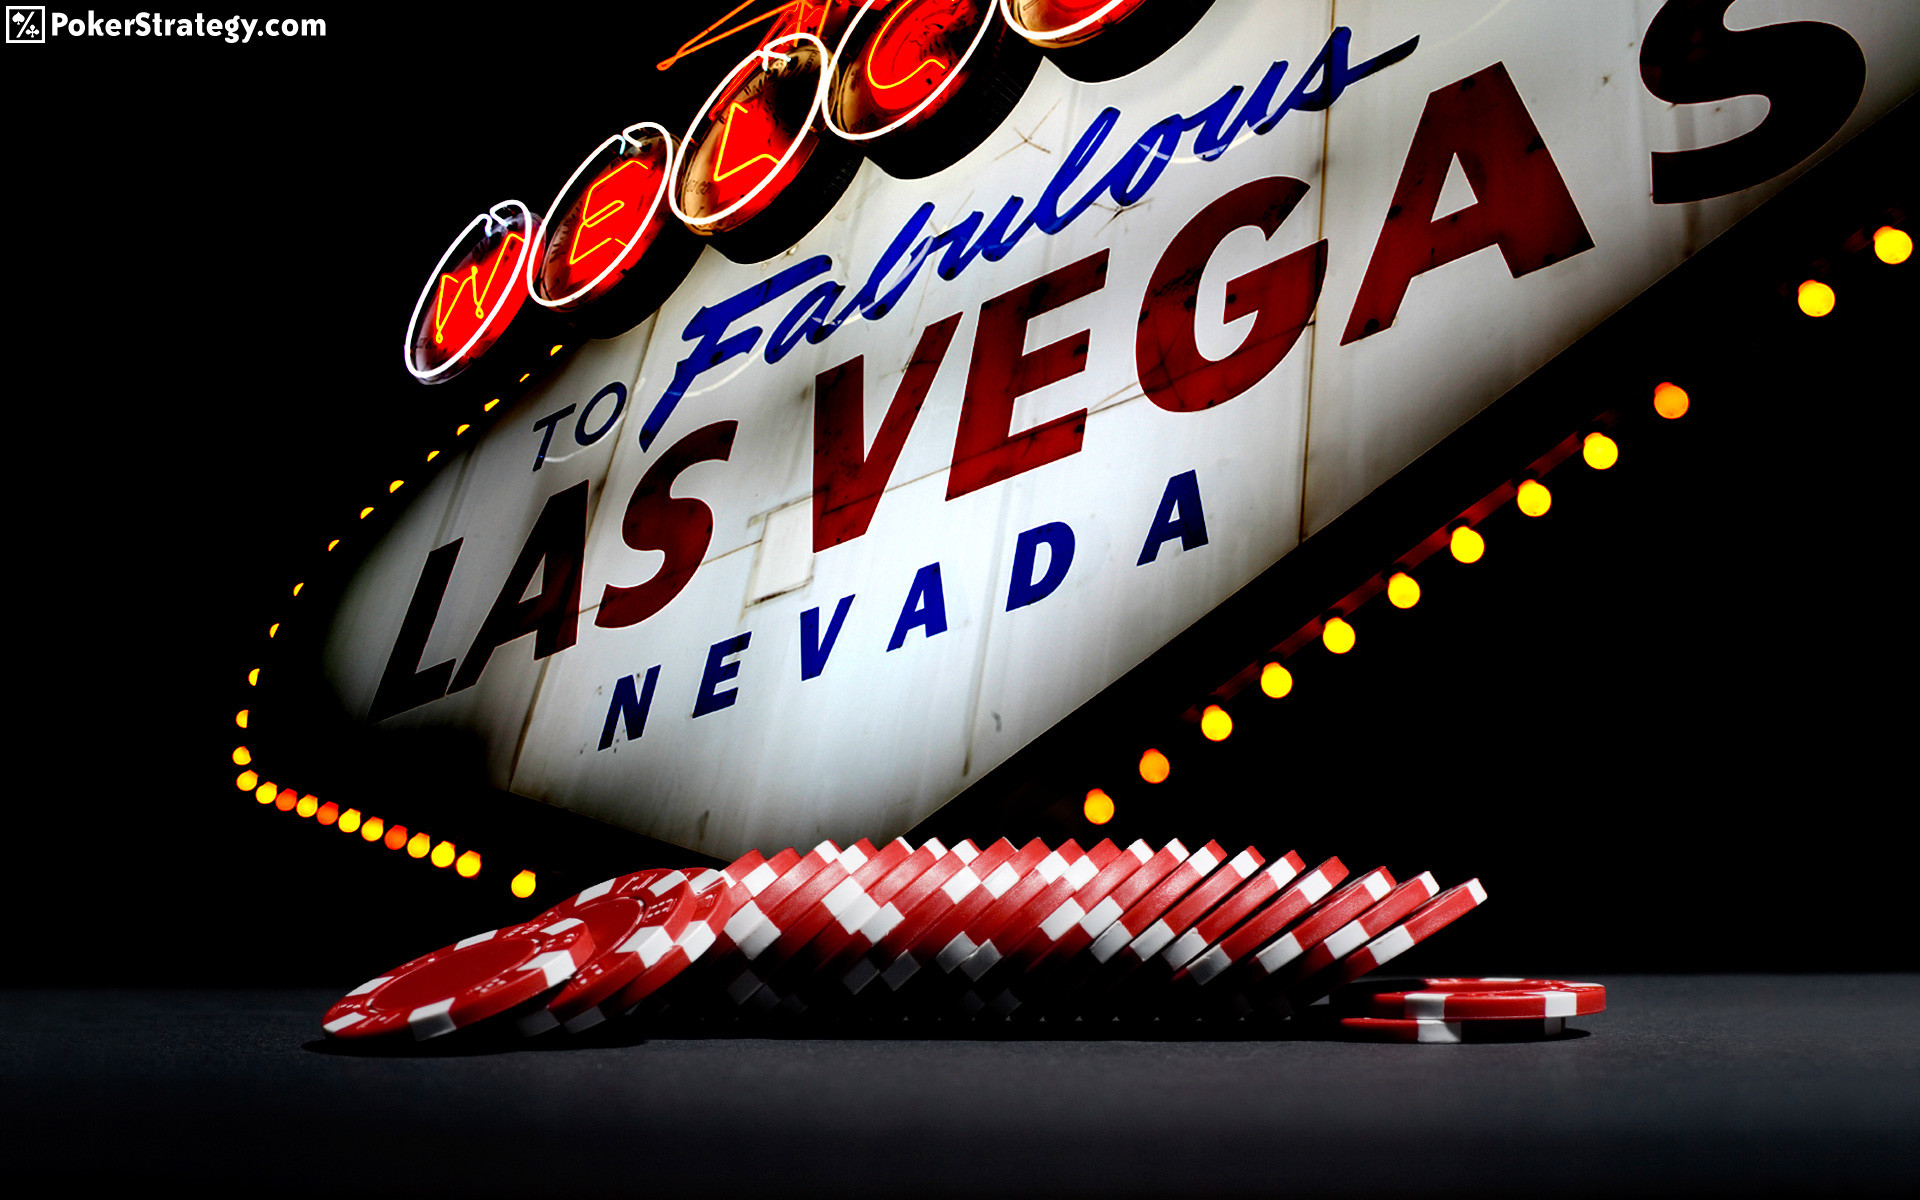 1920x1200 ... Next: Las Vegas poker. Category: Games wallpapers